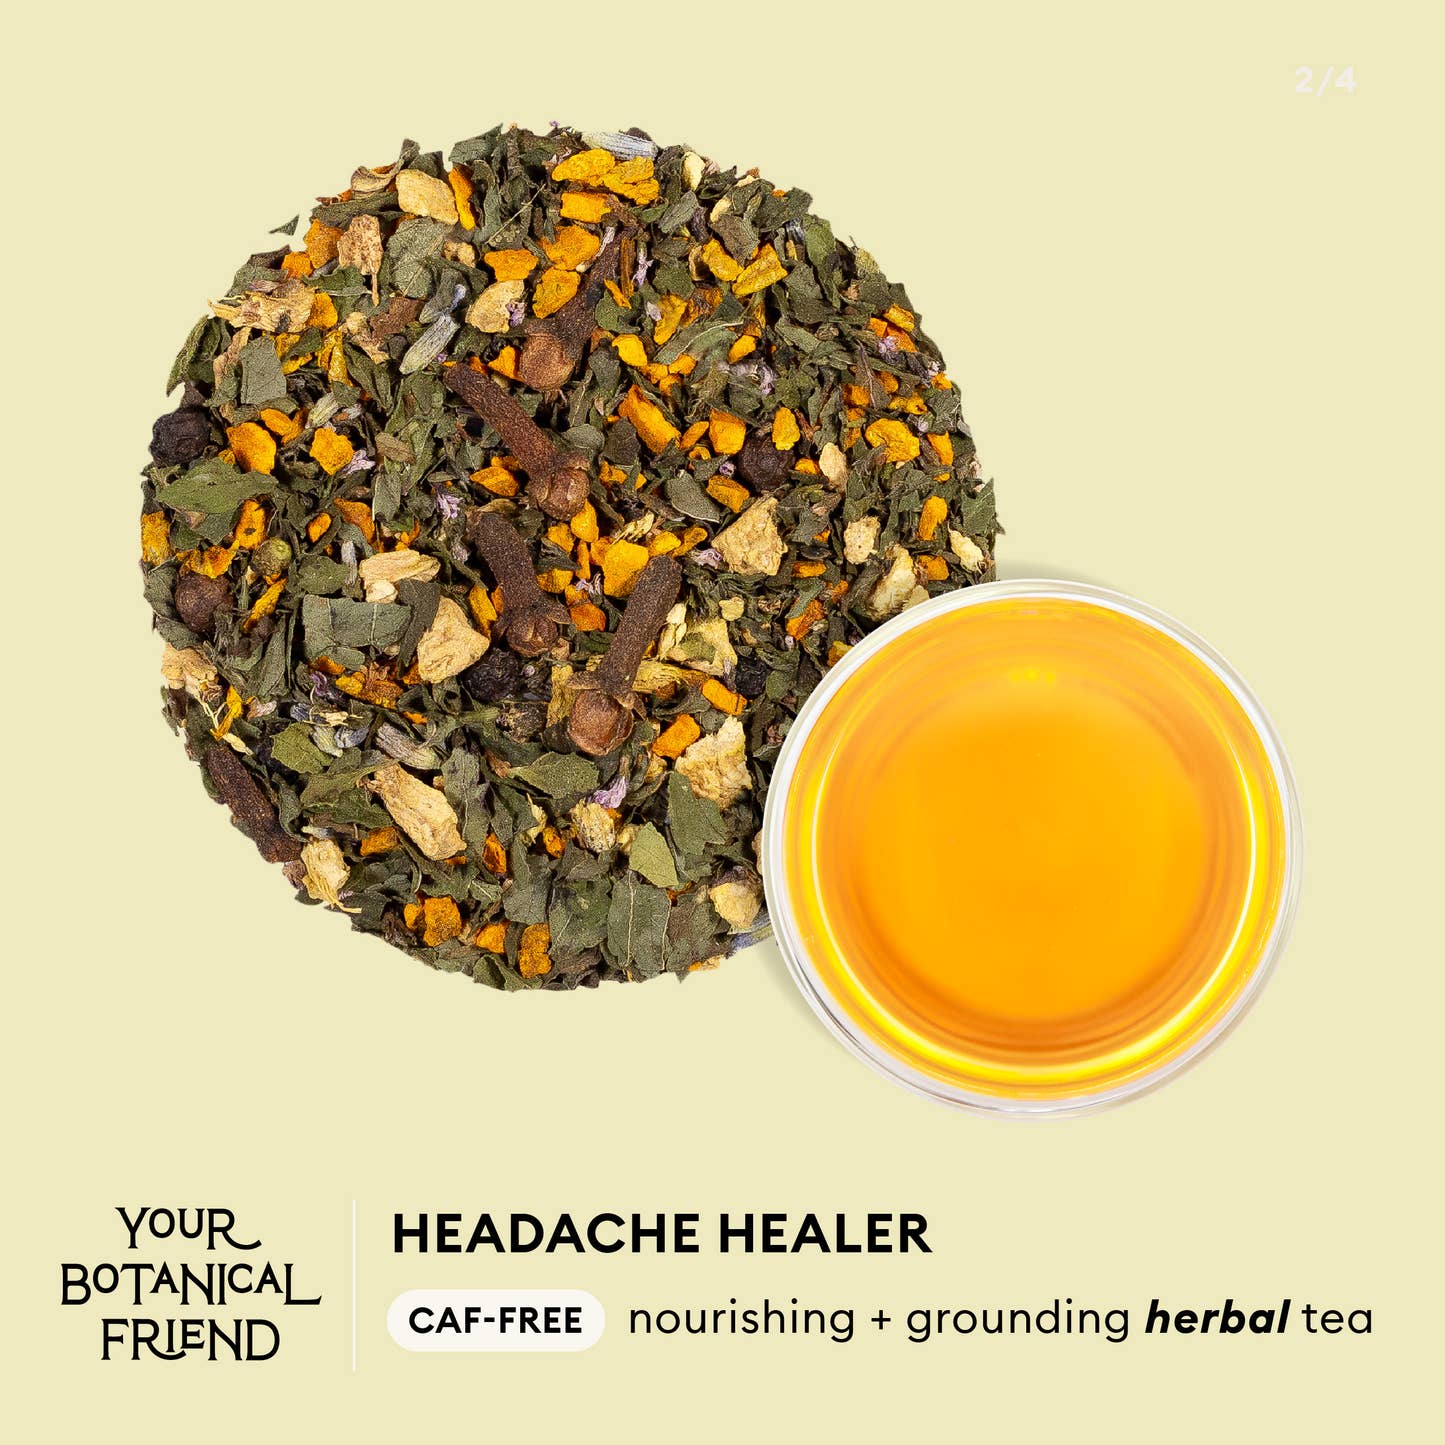 Your Botanical Friend - Headache Healer caf-free, nourishing + grounding infographic